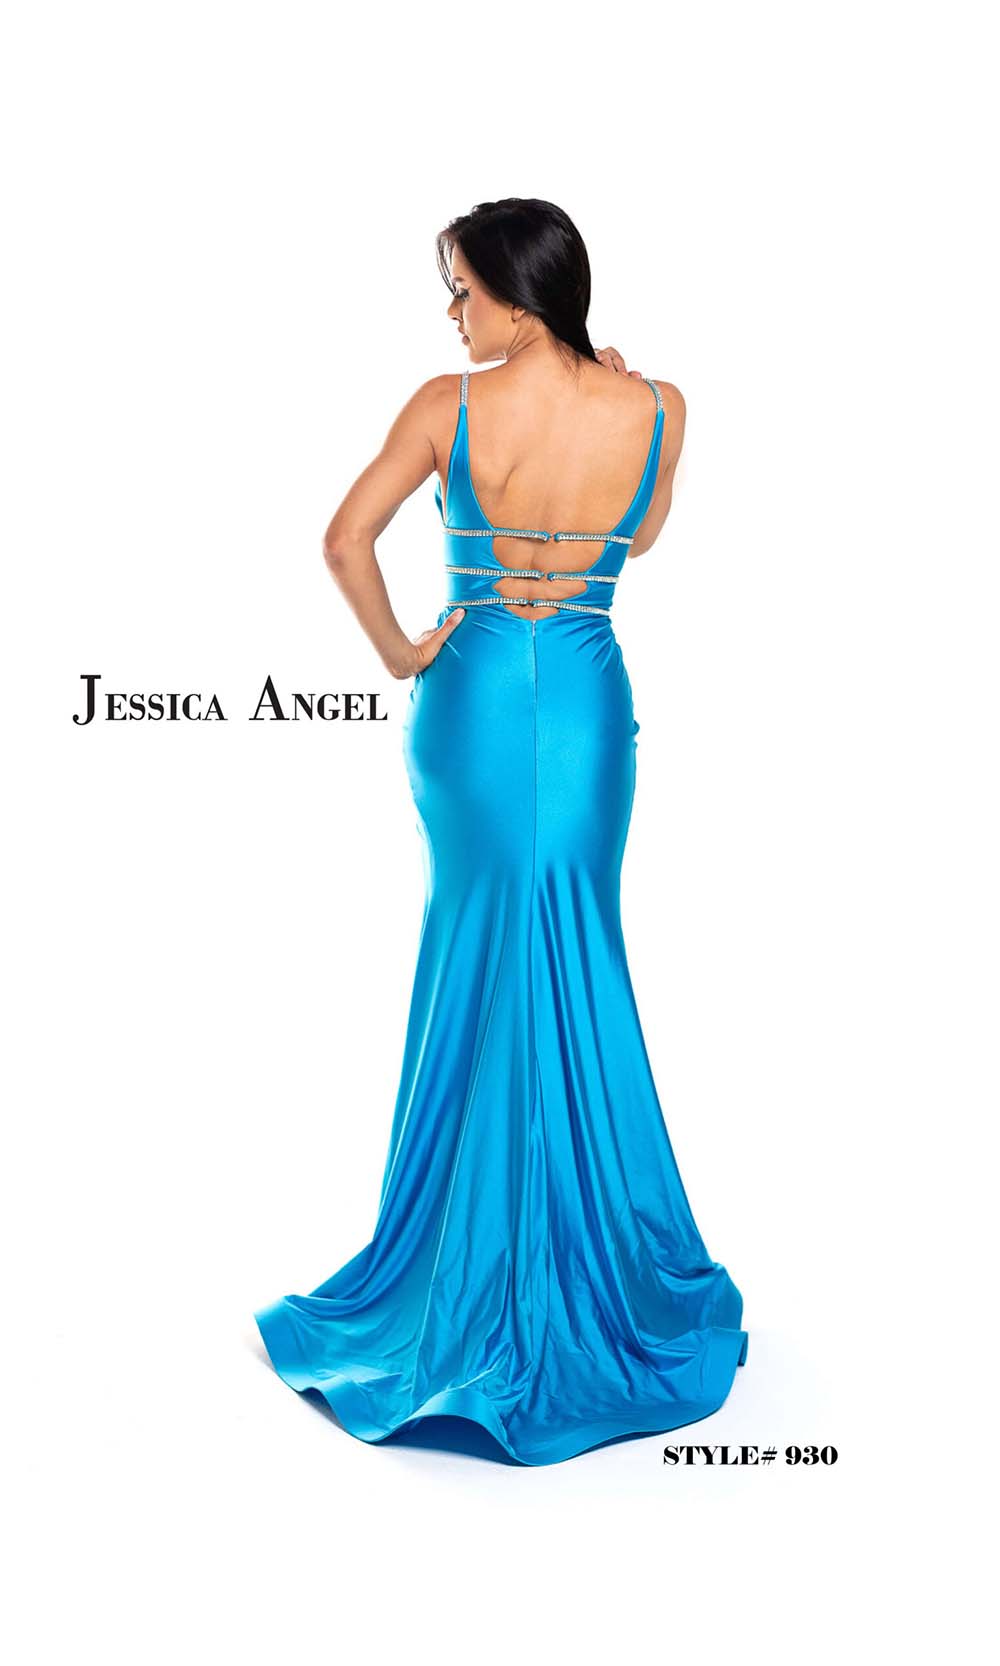 Jessica Angel 930 Aqua